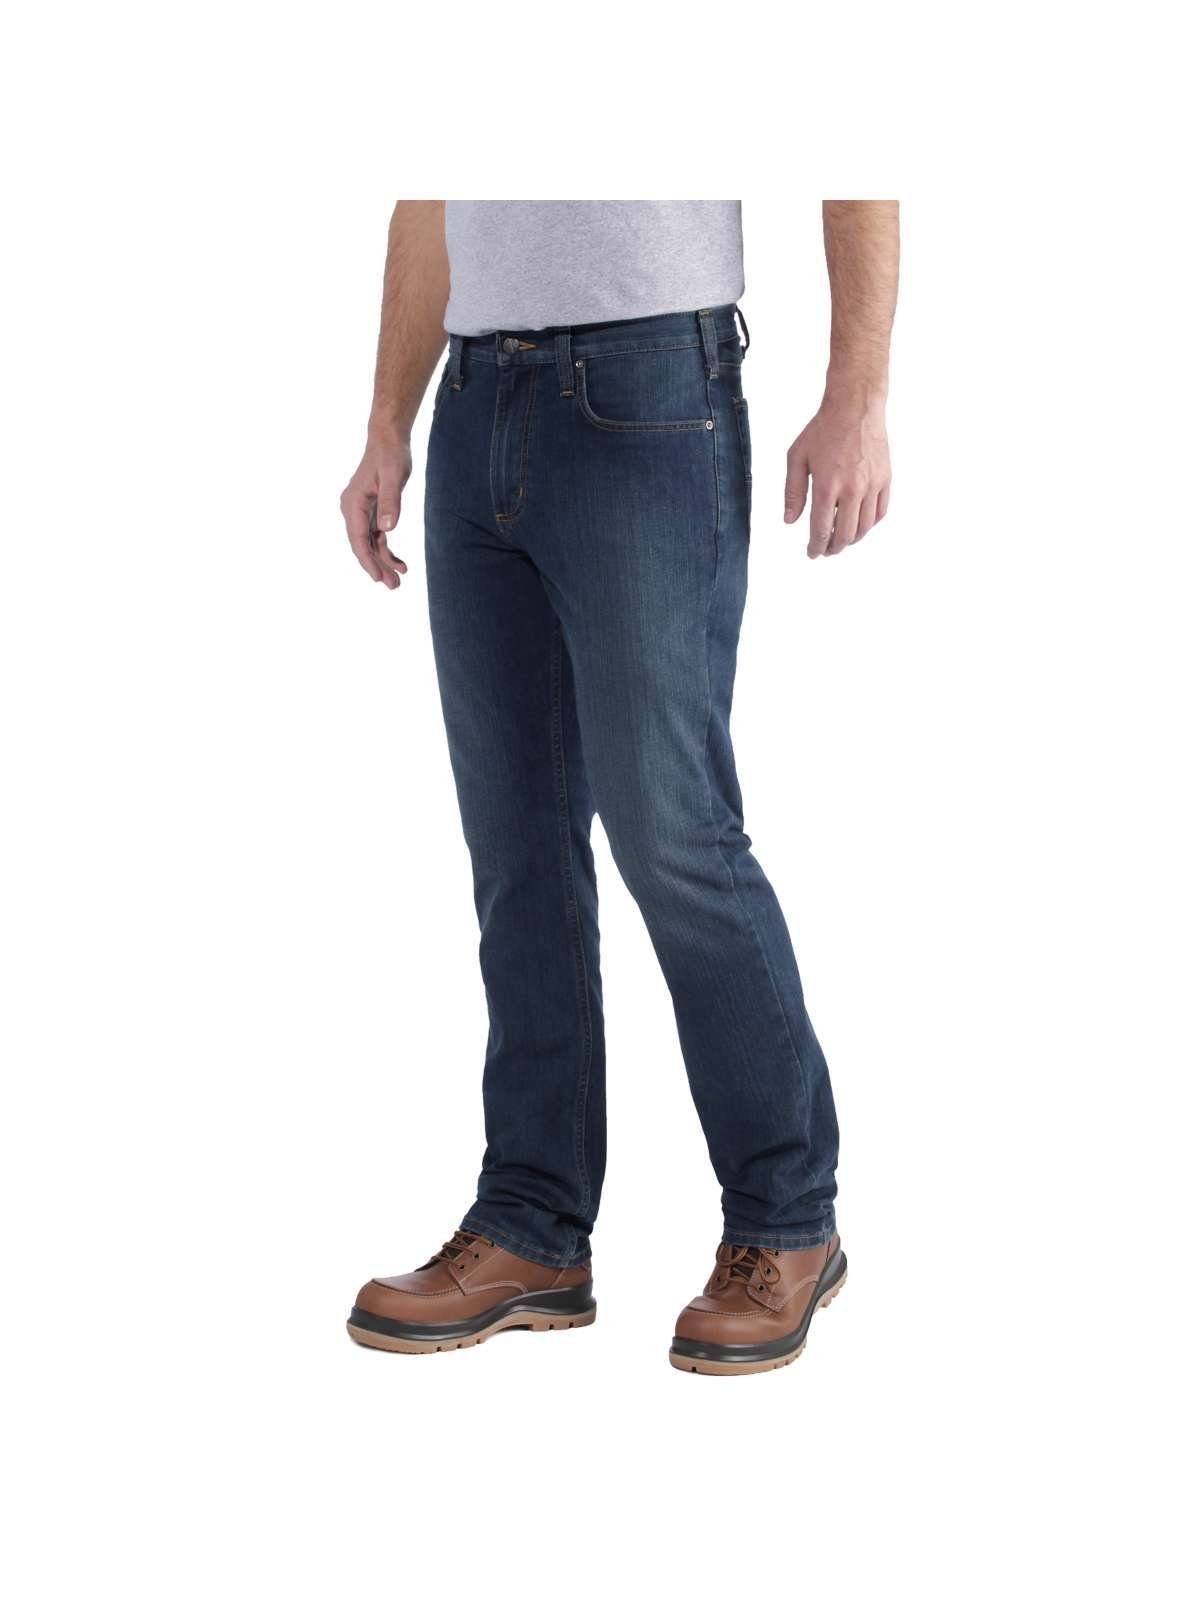 Carhartt Arbeitshose dunkelblau Flex Jeans Carhartt superior Rugged